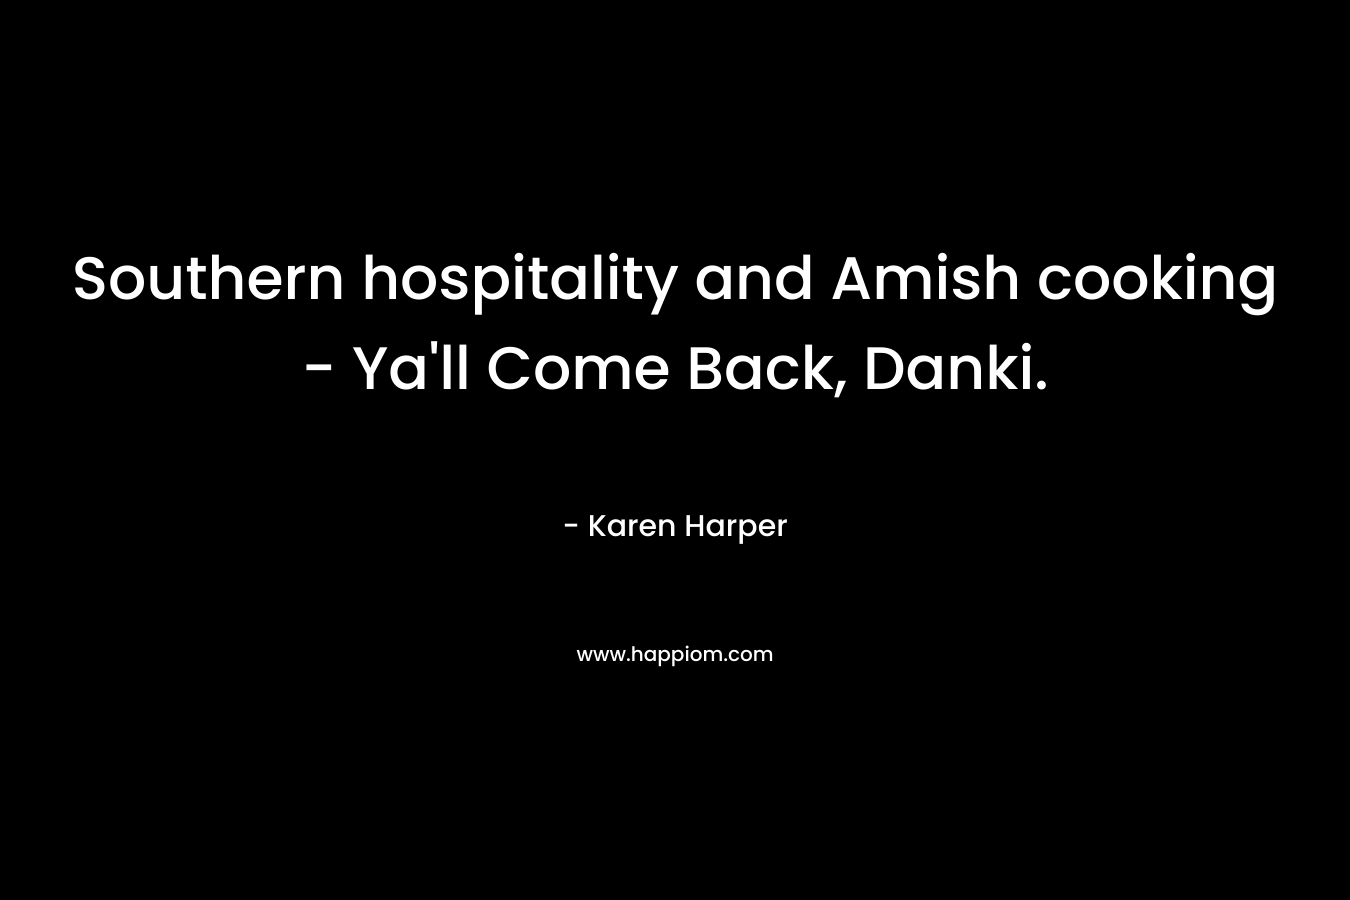 Southern hospitality and Amish cooking - Ya'll Come Back, Danki.